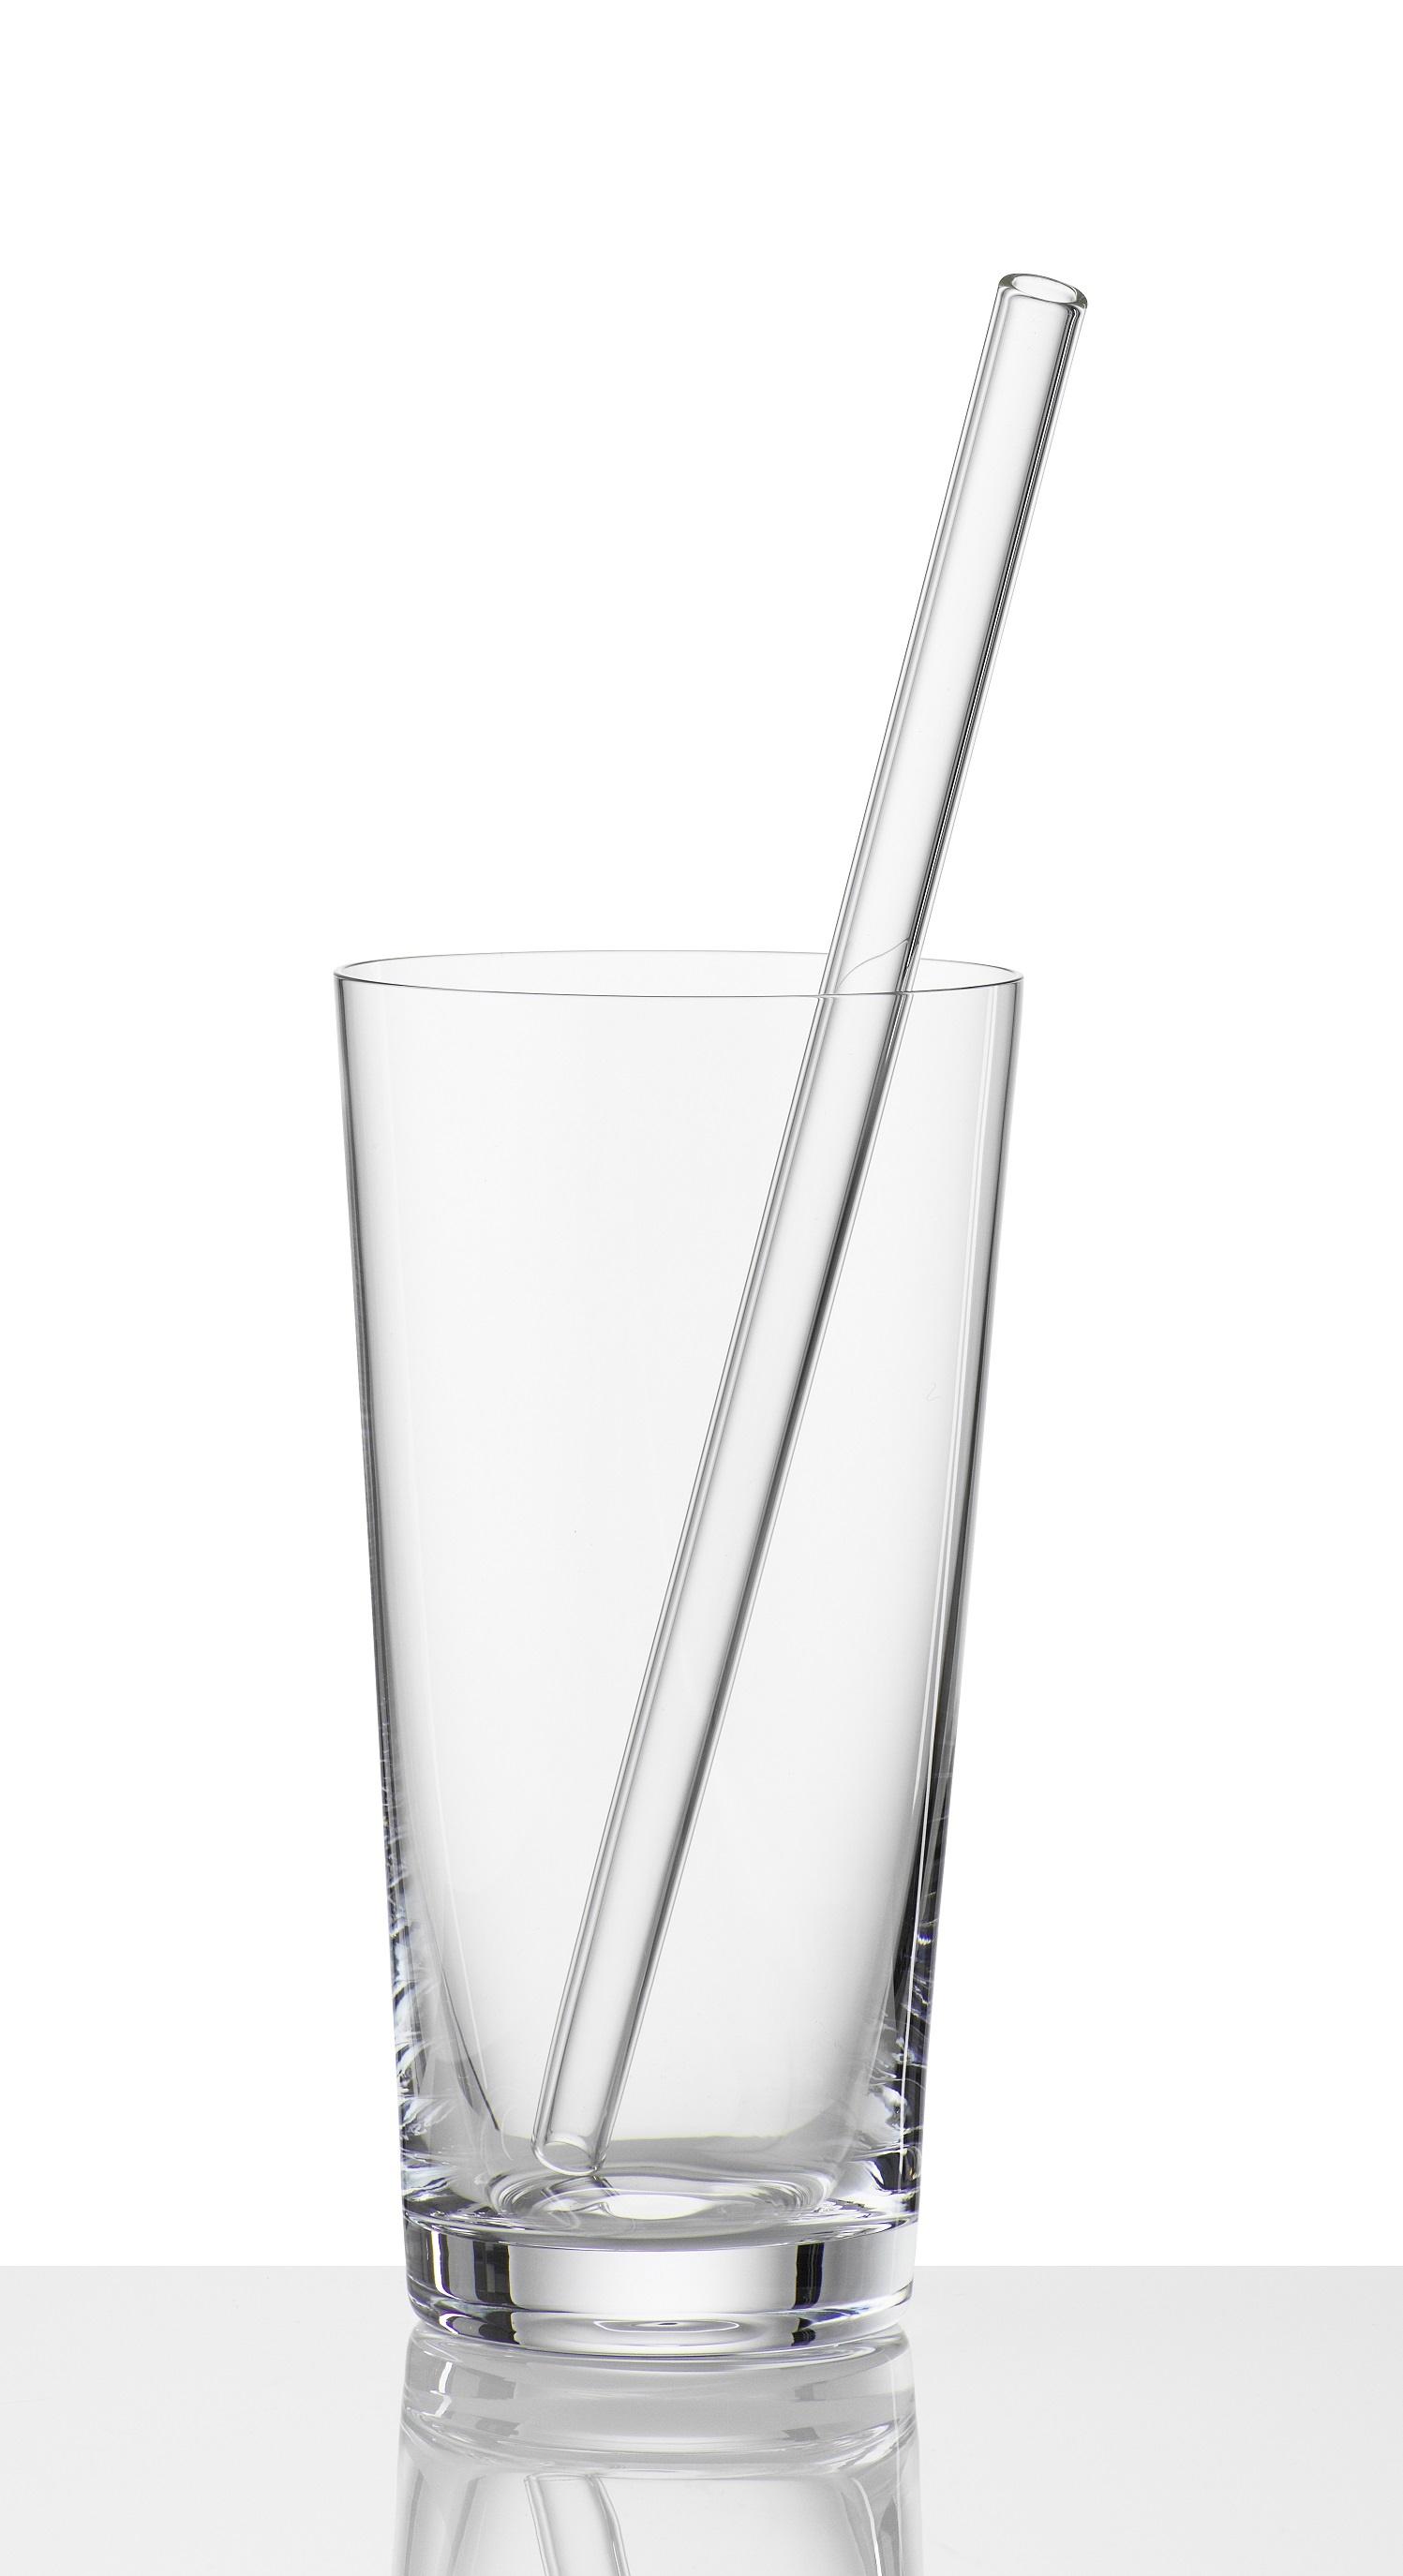 Trinkhalm Jessy aus Glas, 6 Stk. - Klar, MODERN, Glas (20cm) - Premium Living